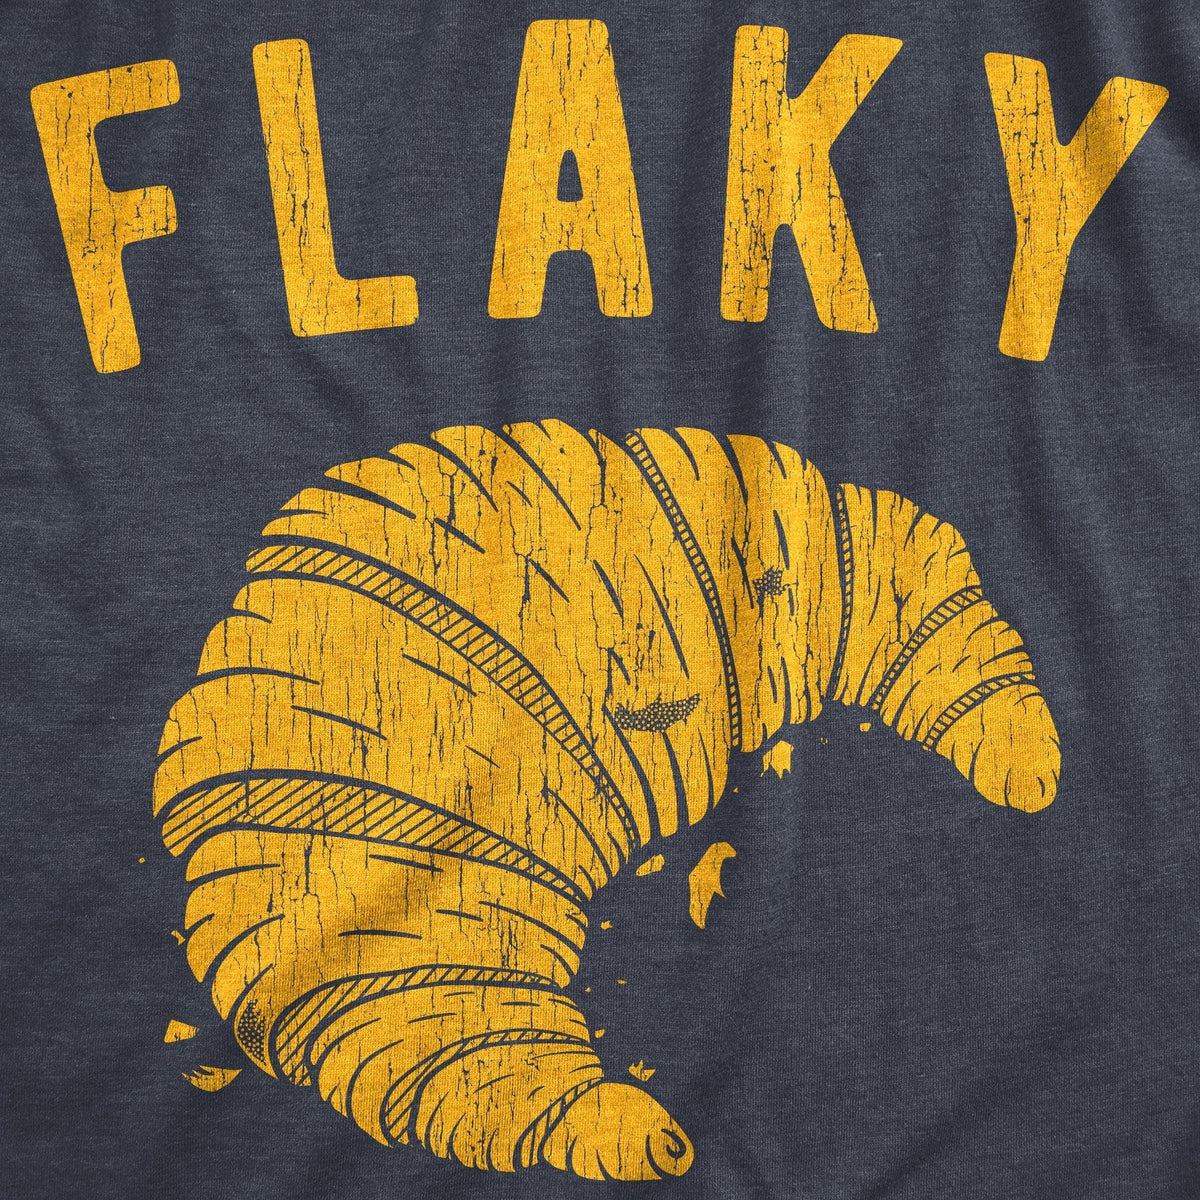 Flaky Men&#39;s Tshirt  -  Crazy Dog T-Shirts